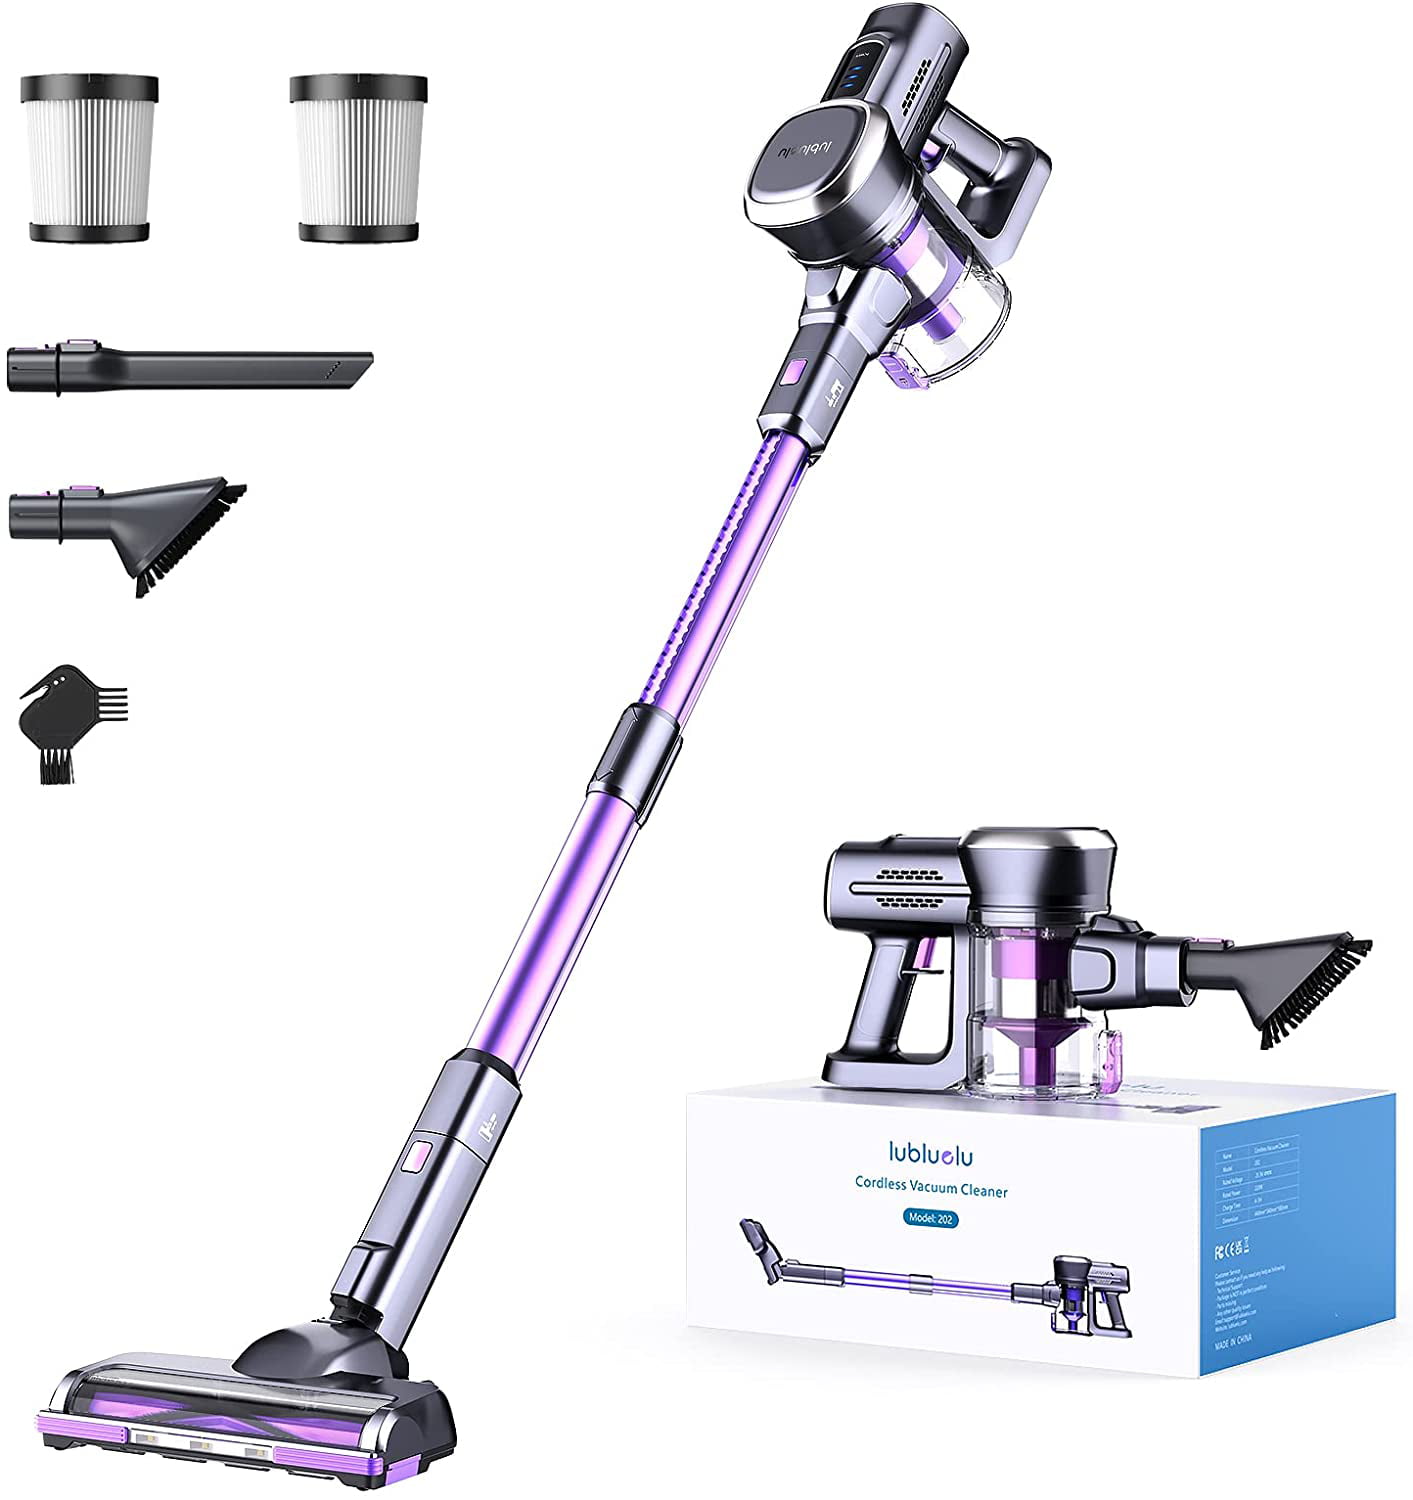 VacLife 25Kpa Cordless Stick Vacuum Cleaner - Cordless Vacuum Cleaner